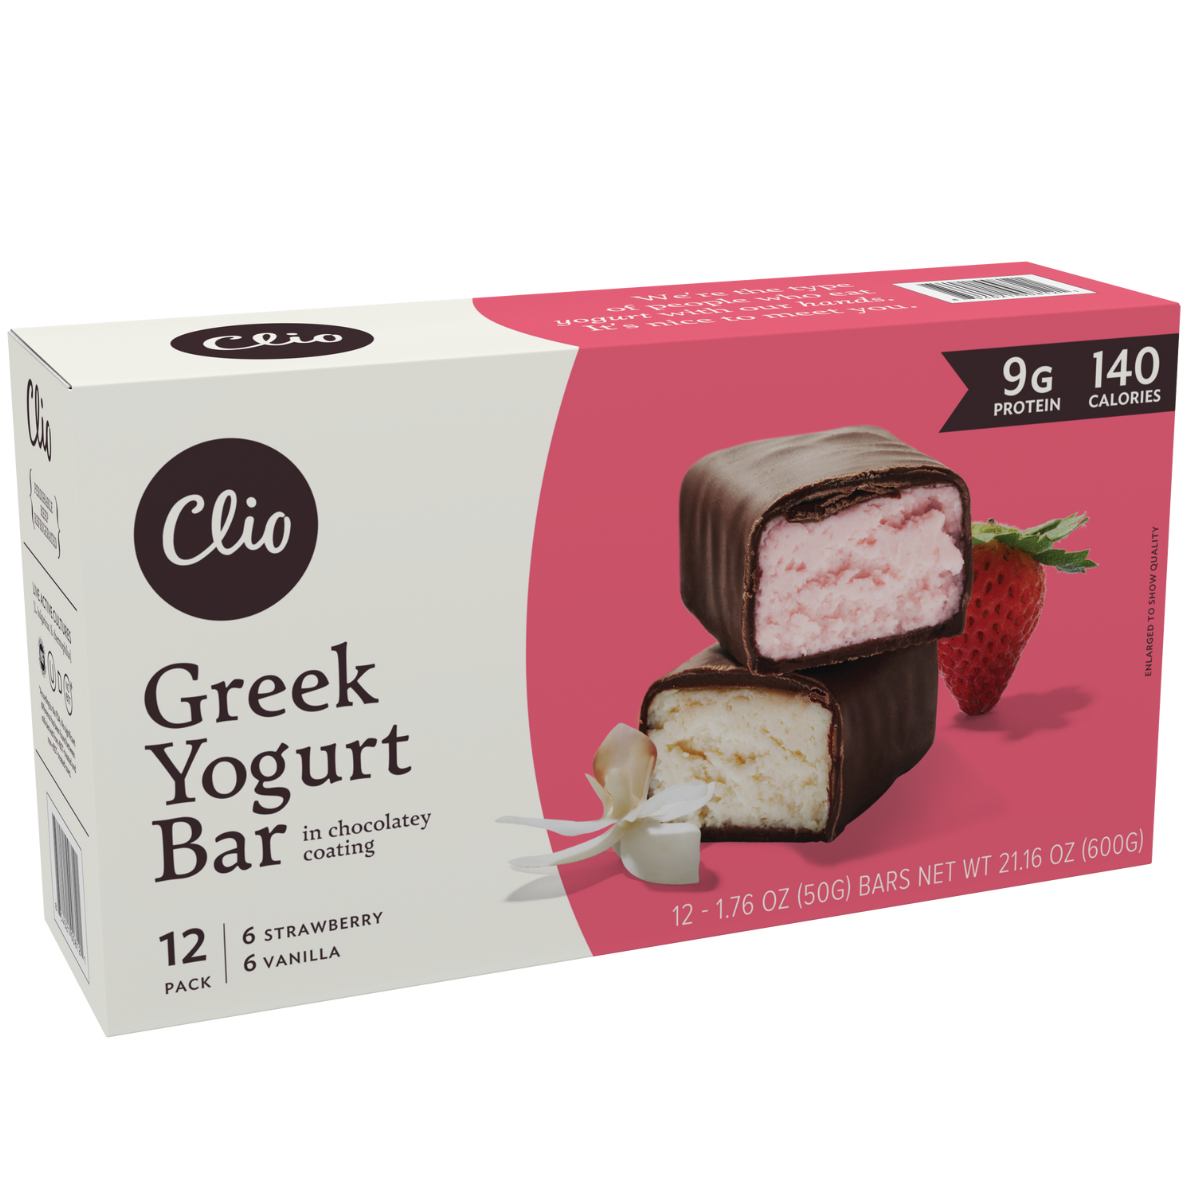 Strawberry & Vanilla Greek Yogurt Bar Pack - 12 Bar Count